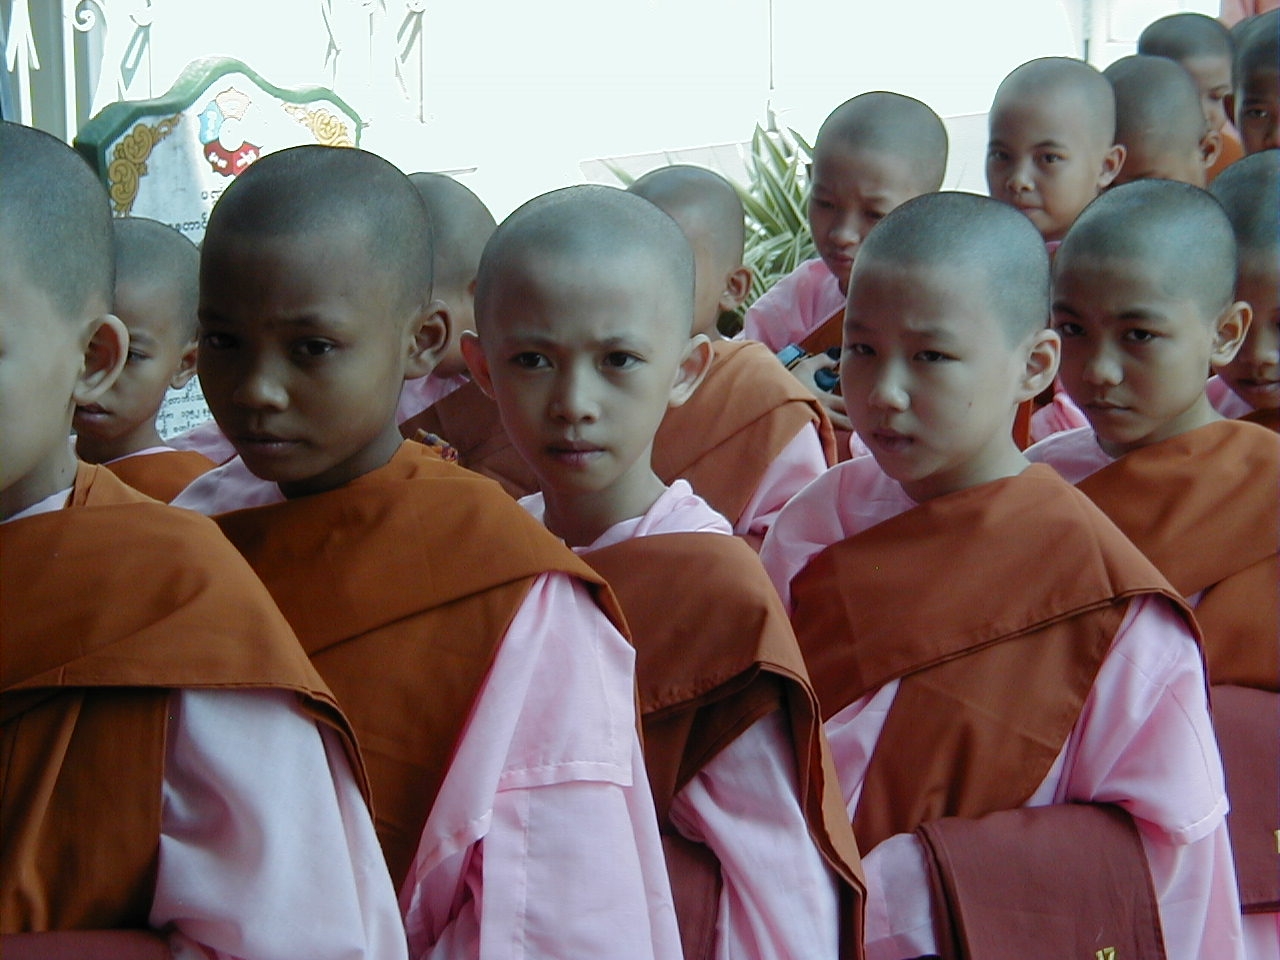 Fledgling nuns, Myanmar